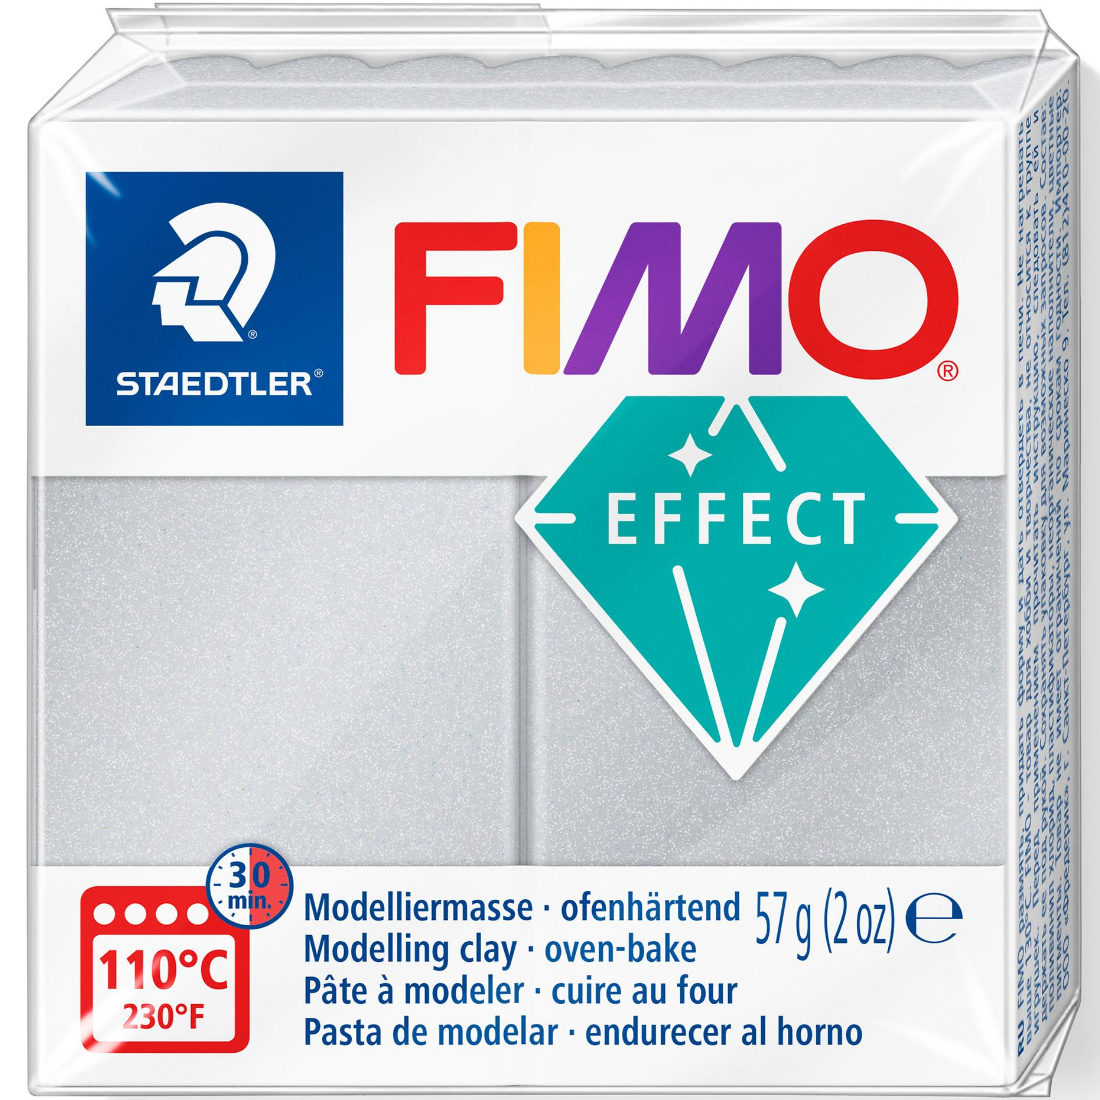 Pasta de Modelar FIMO Effect Pearl staedtler